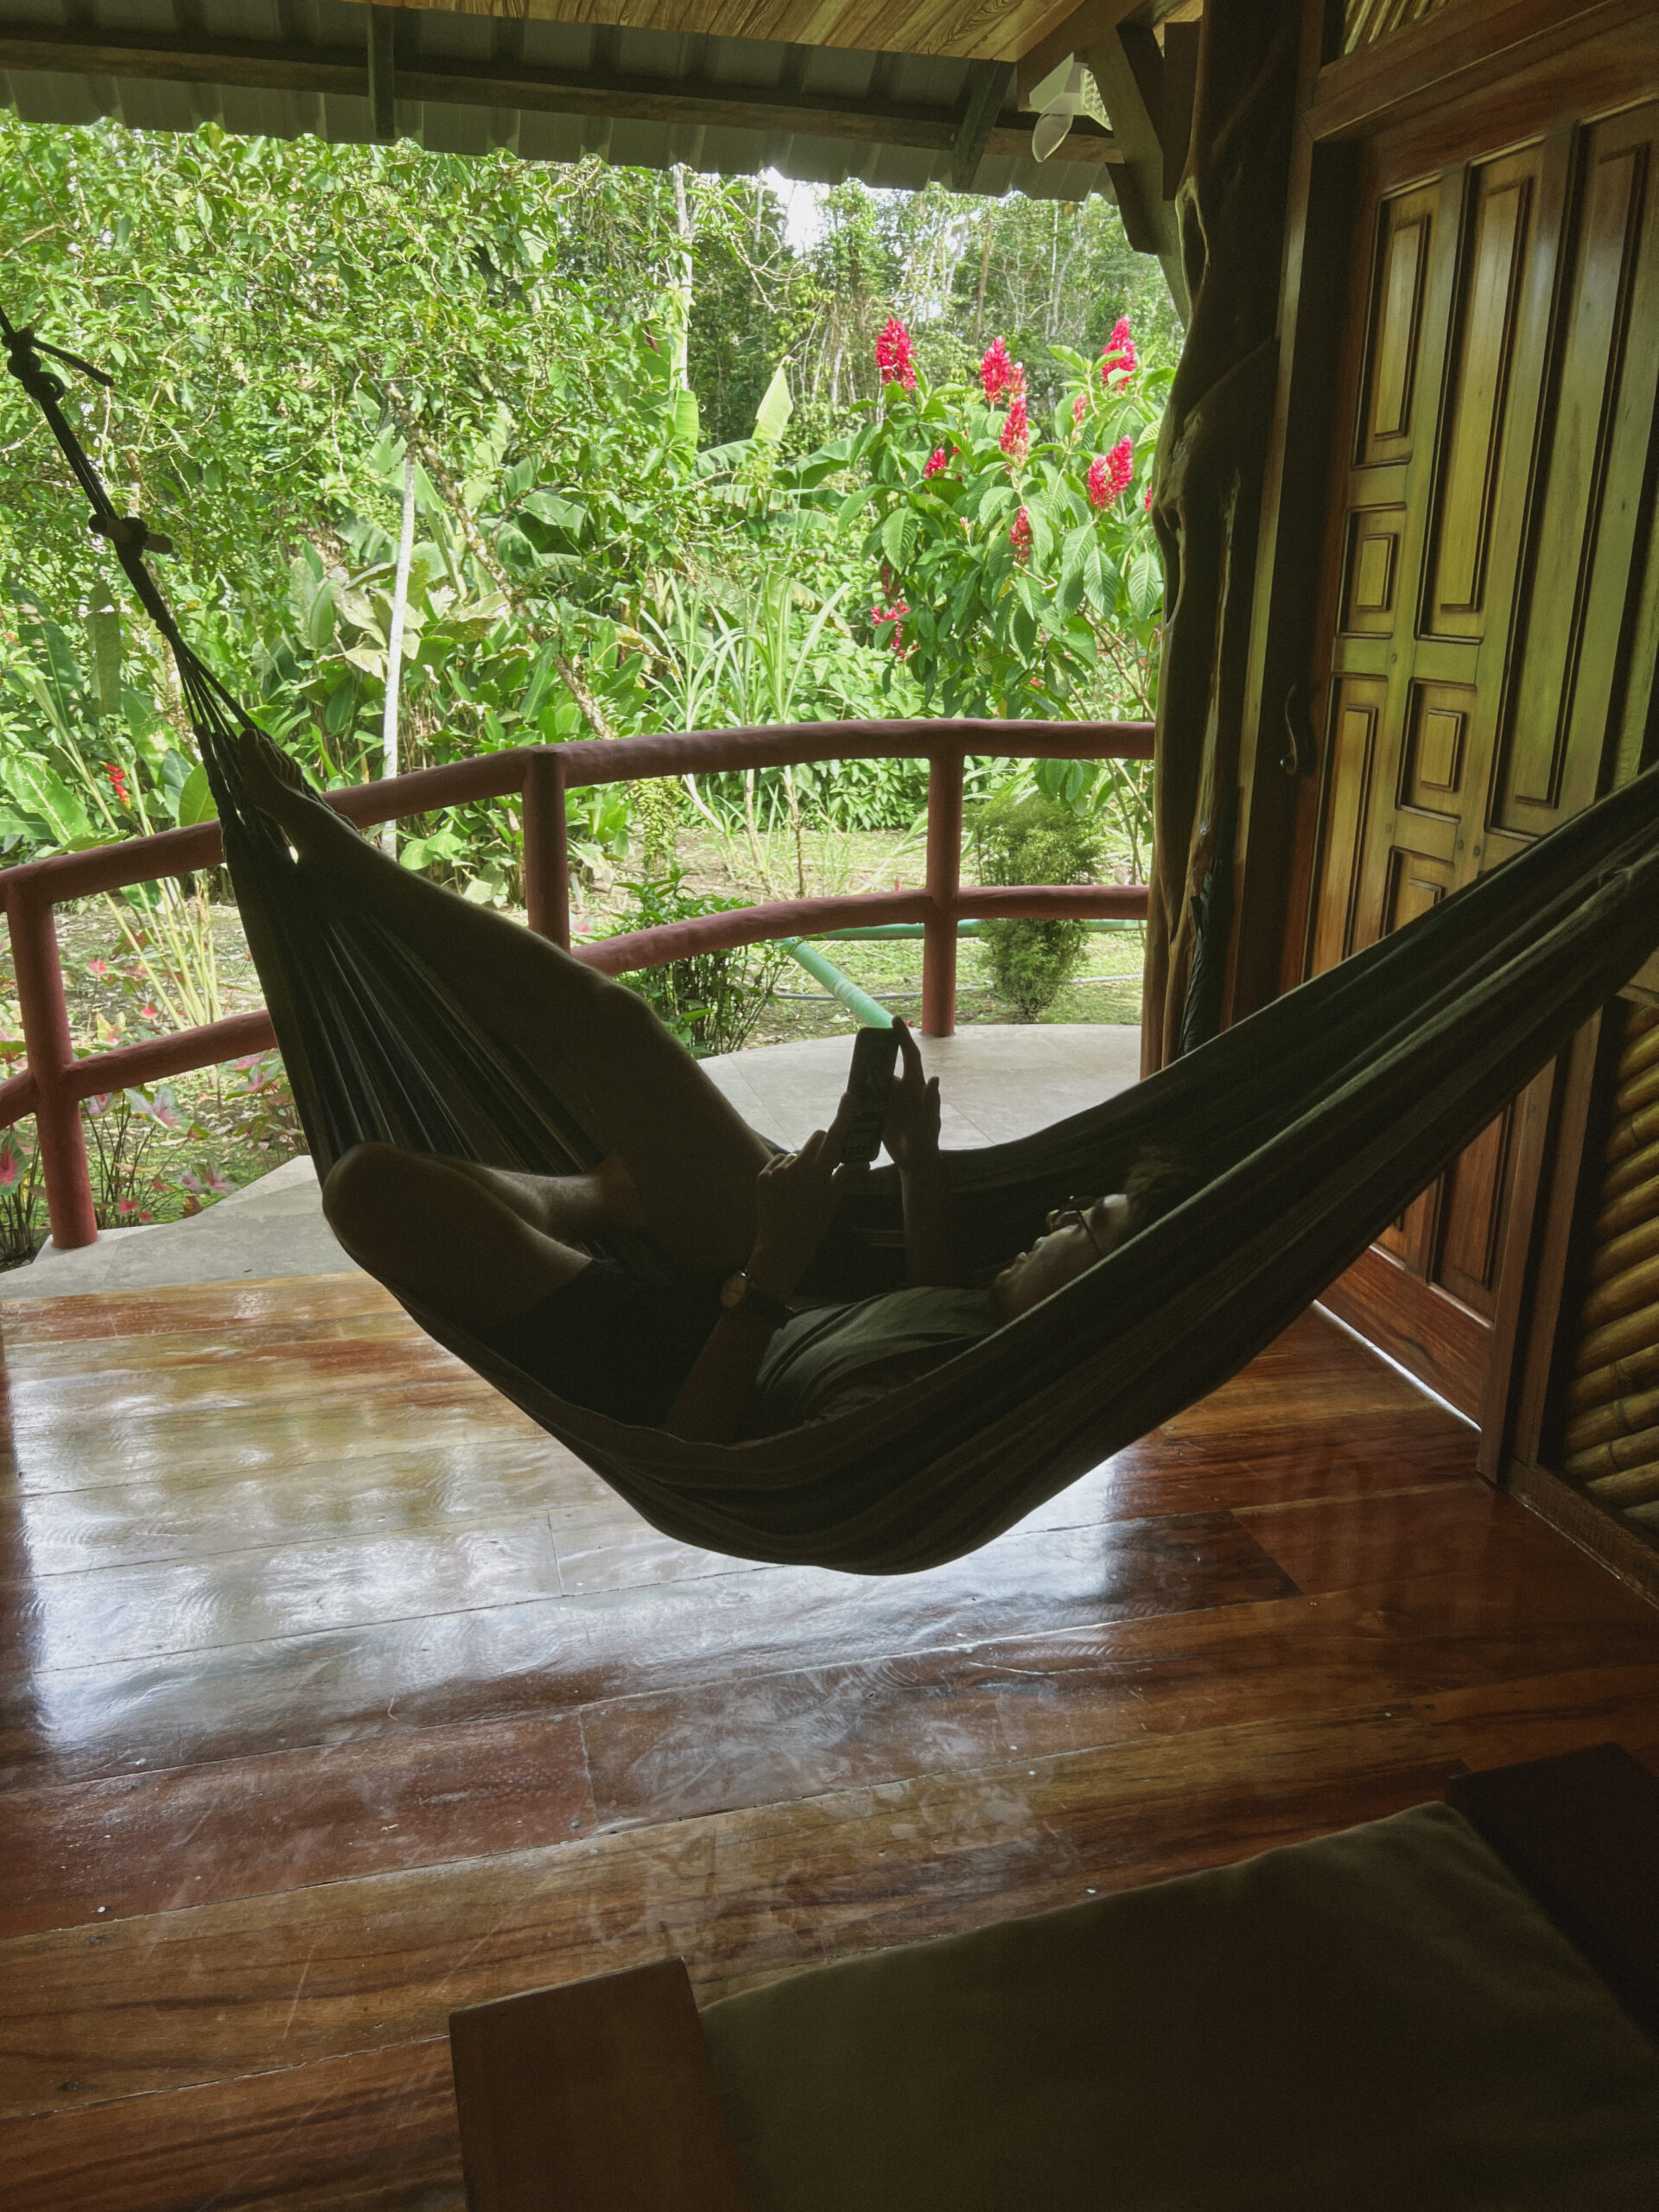 Napo Cultural Center review: 4 days at an Amazon Lodge in Ecuador